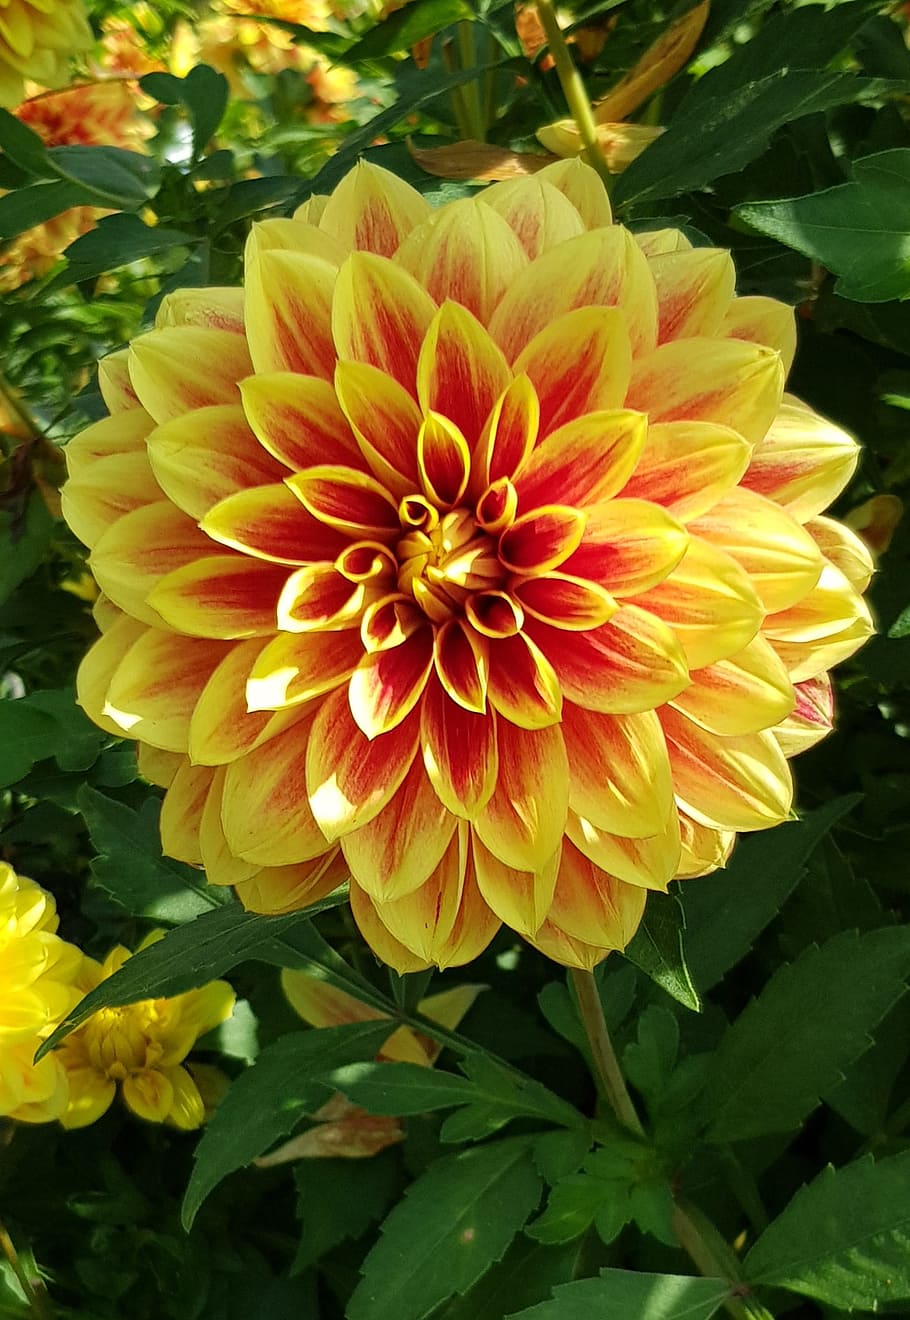 amarillo, rojo, fotografía de la flor de la dalia, dalia, flor, flor de la dalia, florecer, finales de verano, jardín, jardín de la dalia